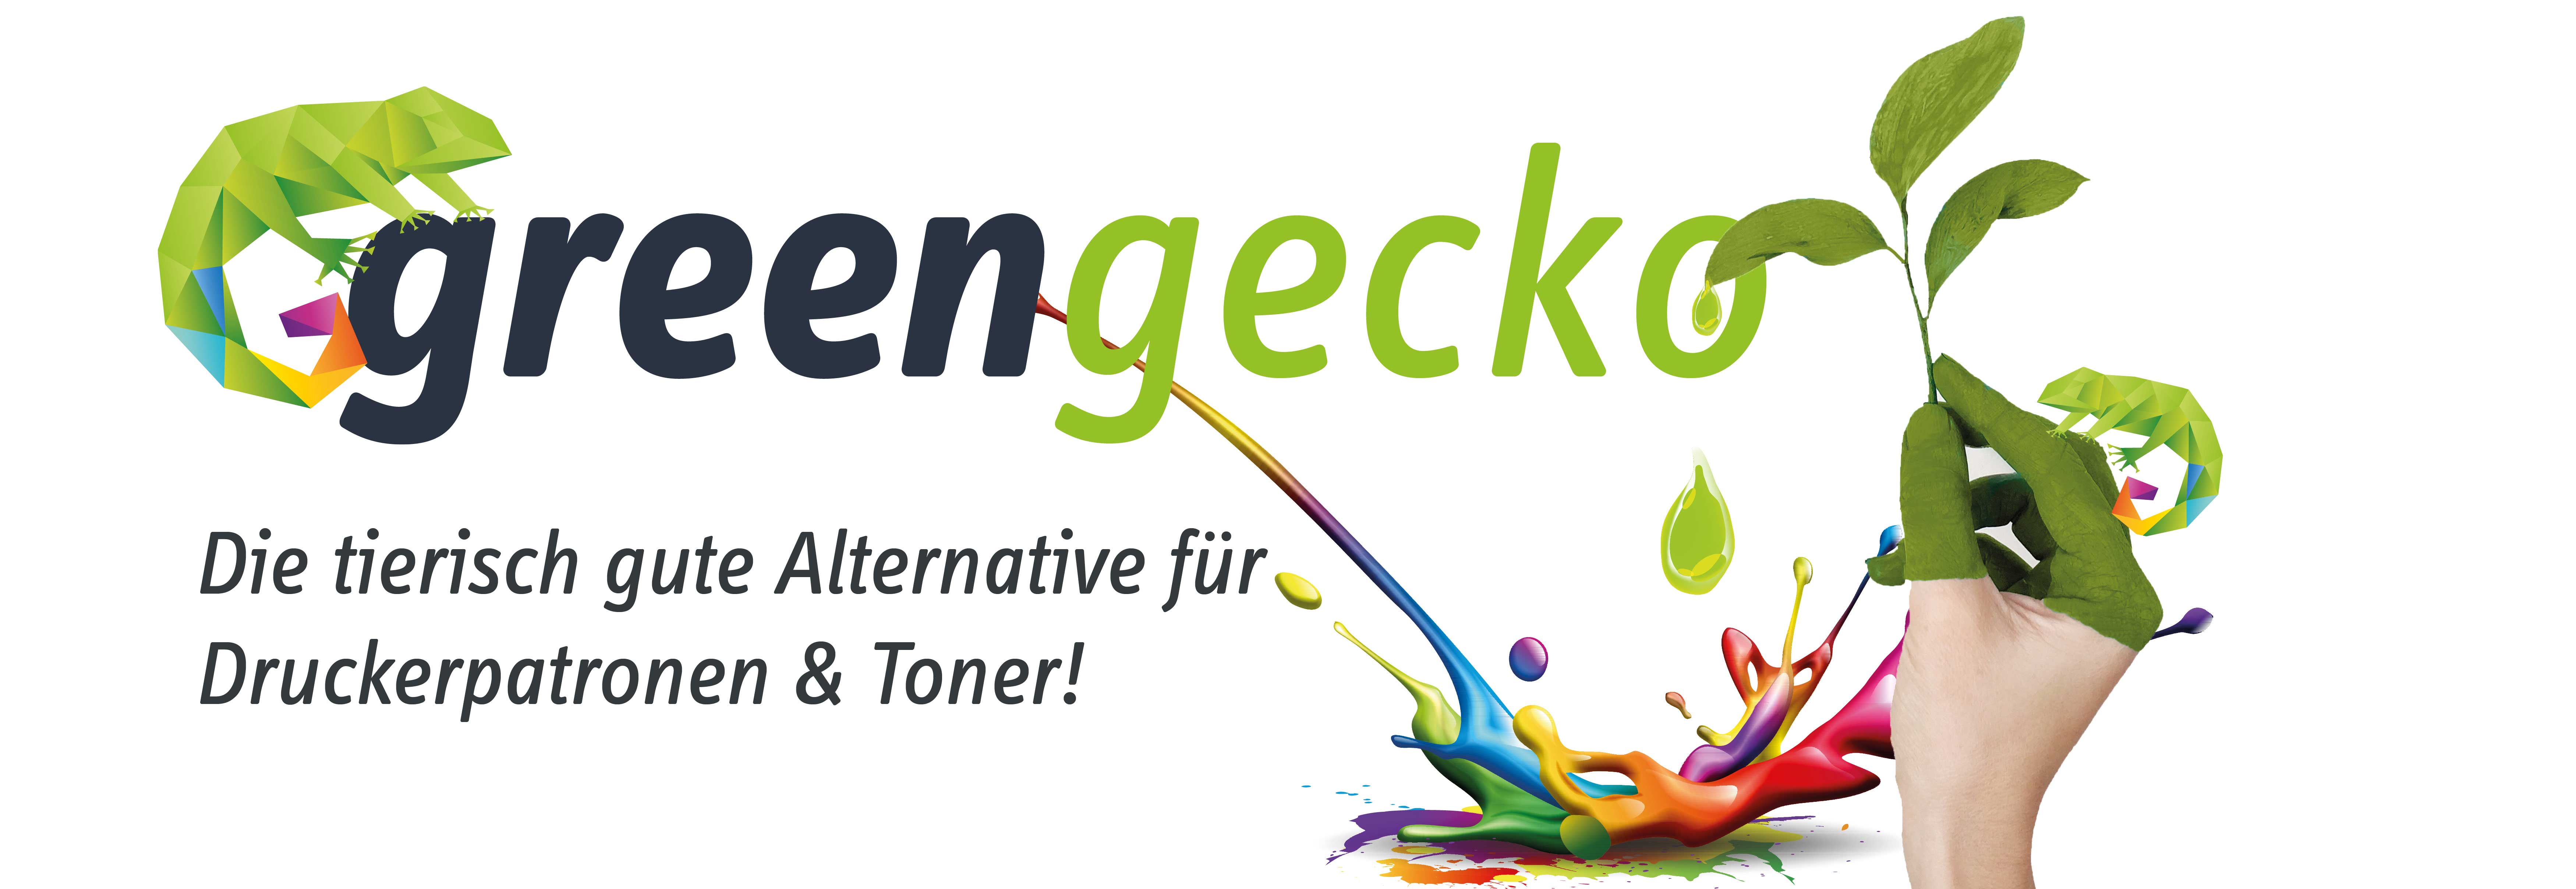 greengecko-banner